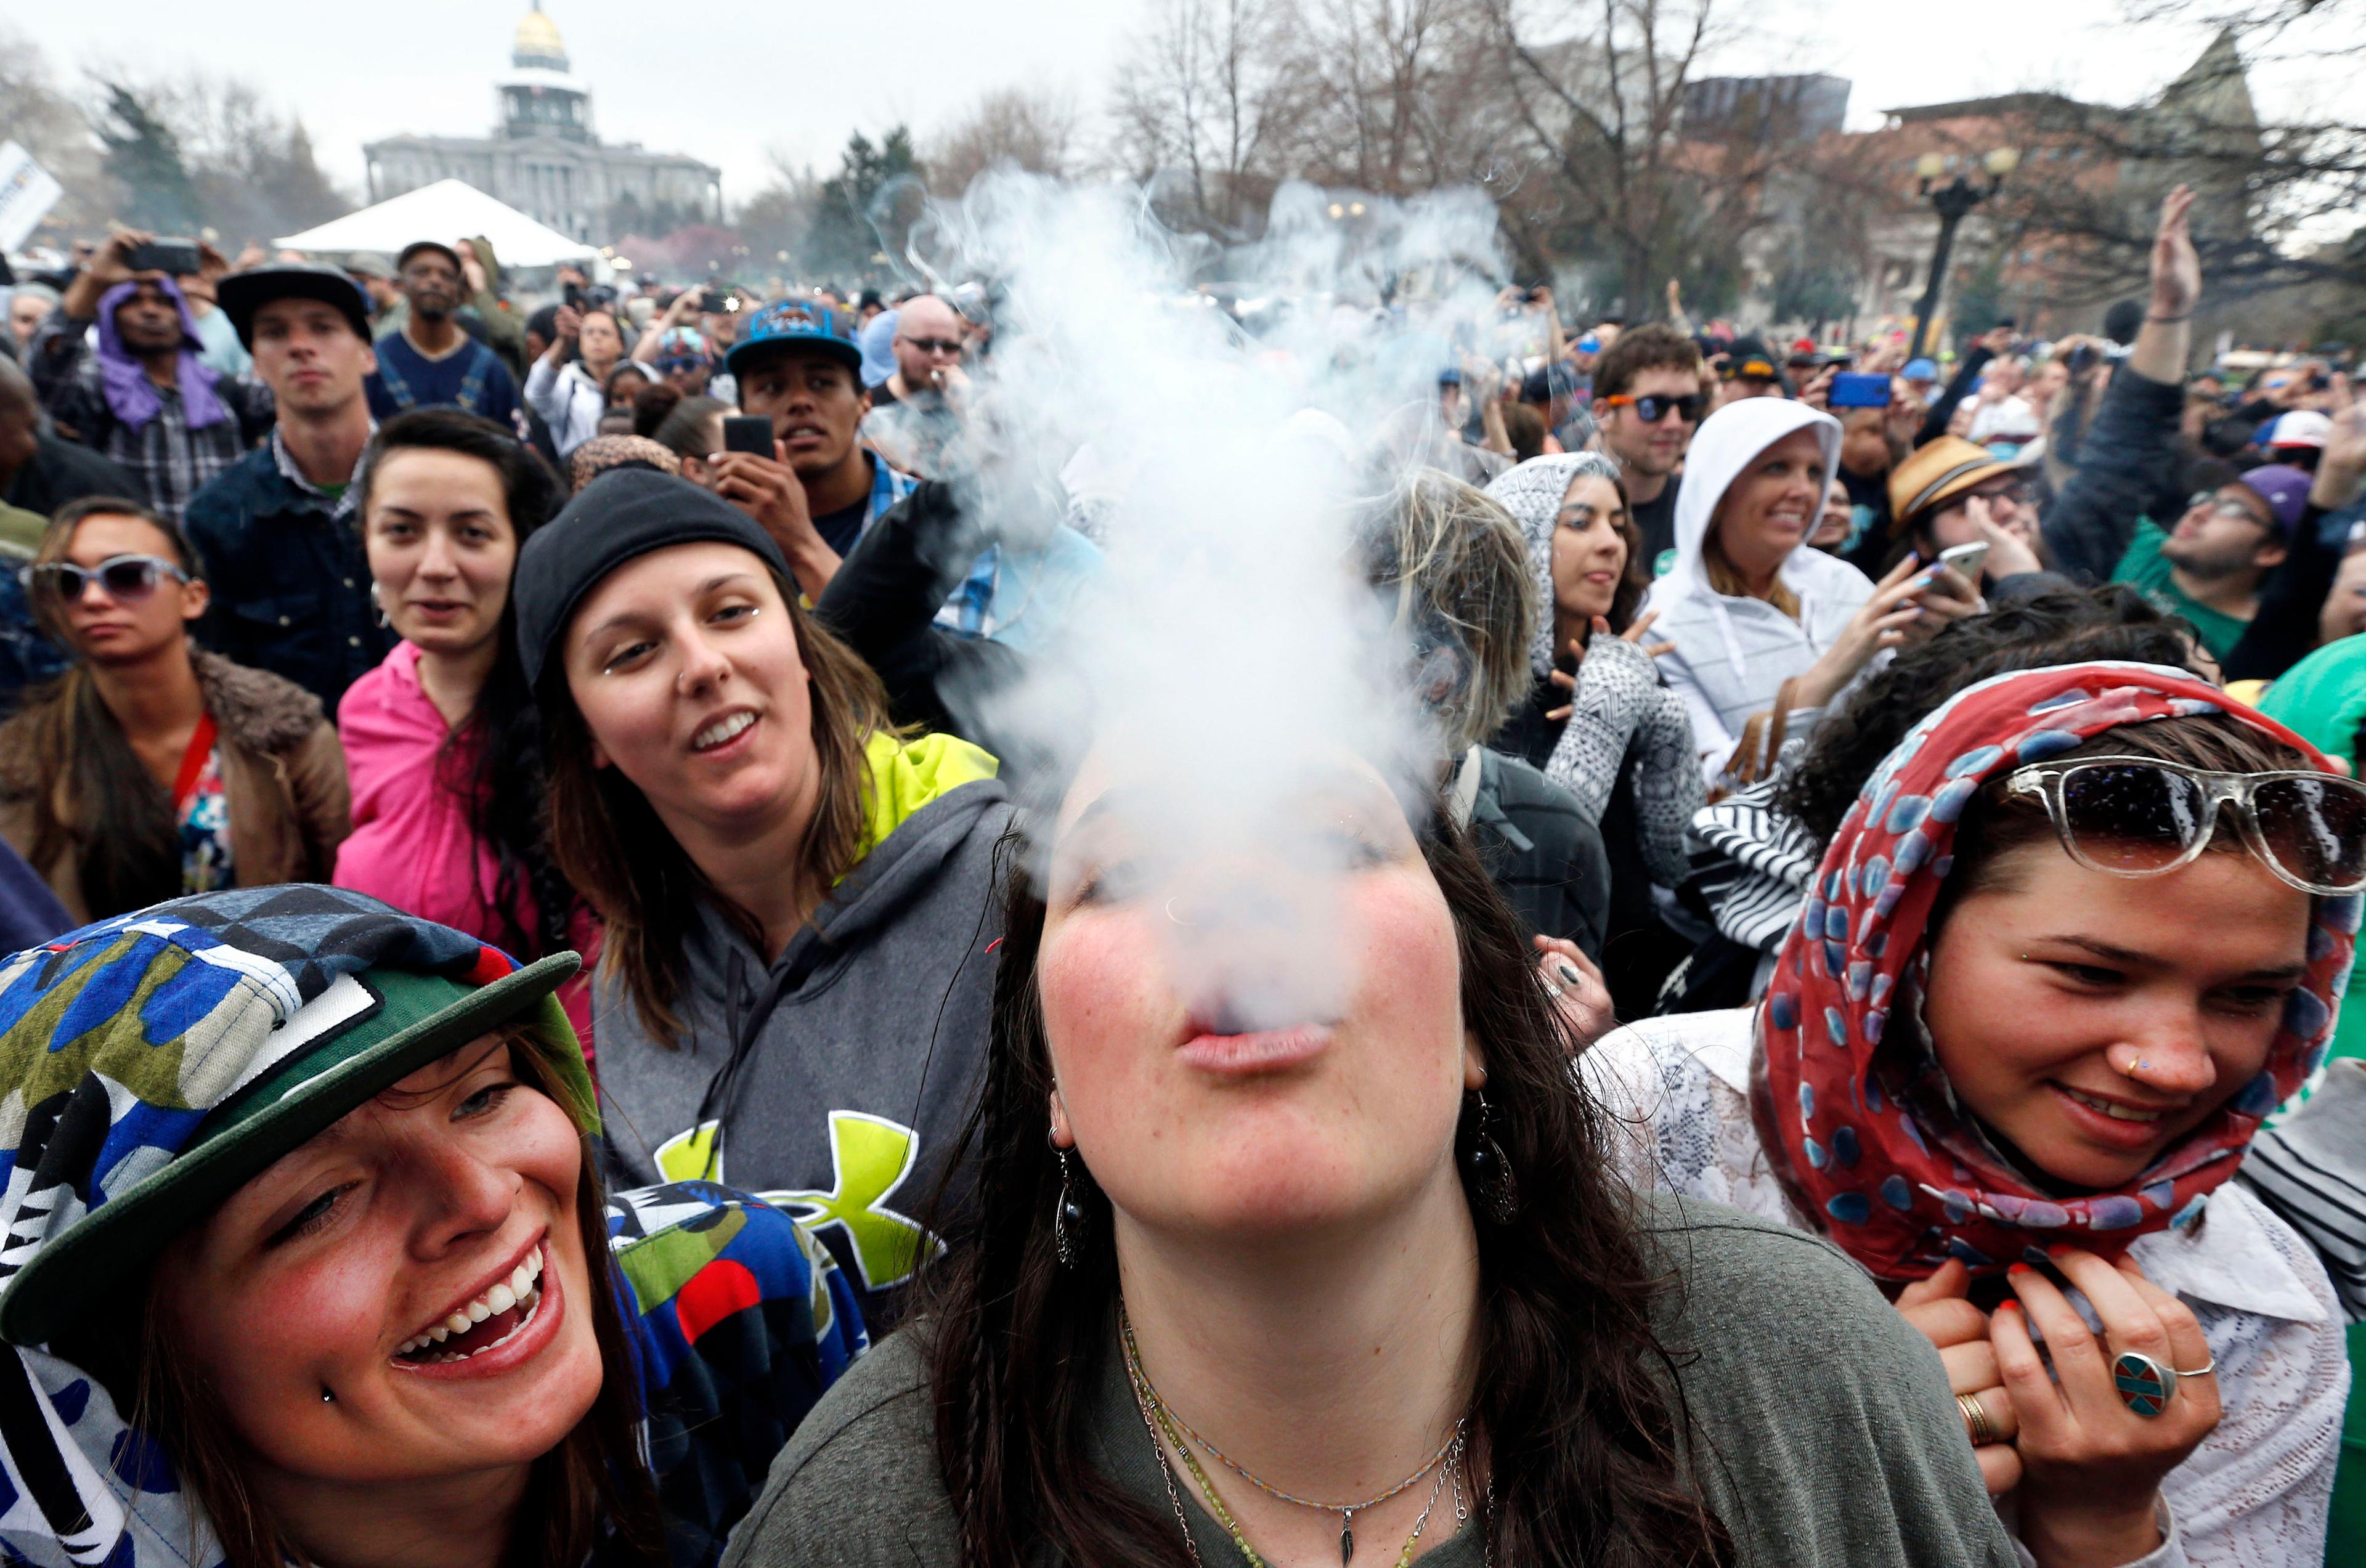 Photo: Smoking marijuana in public (AP Photo)